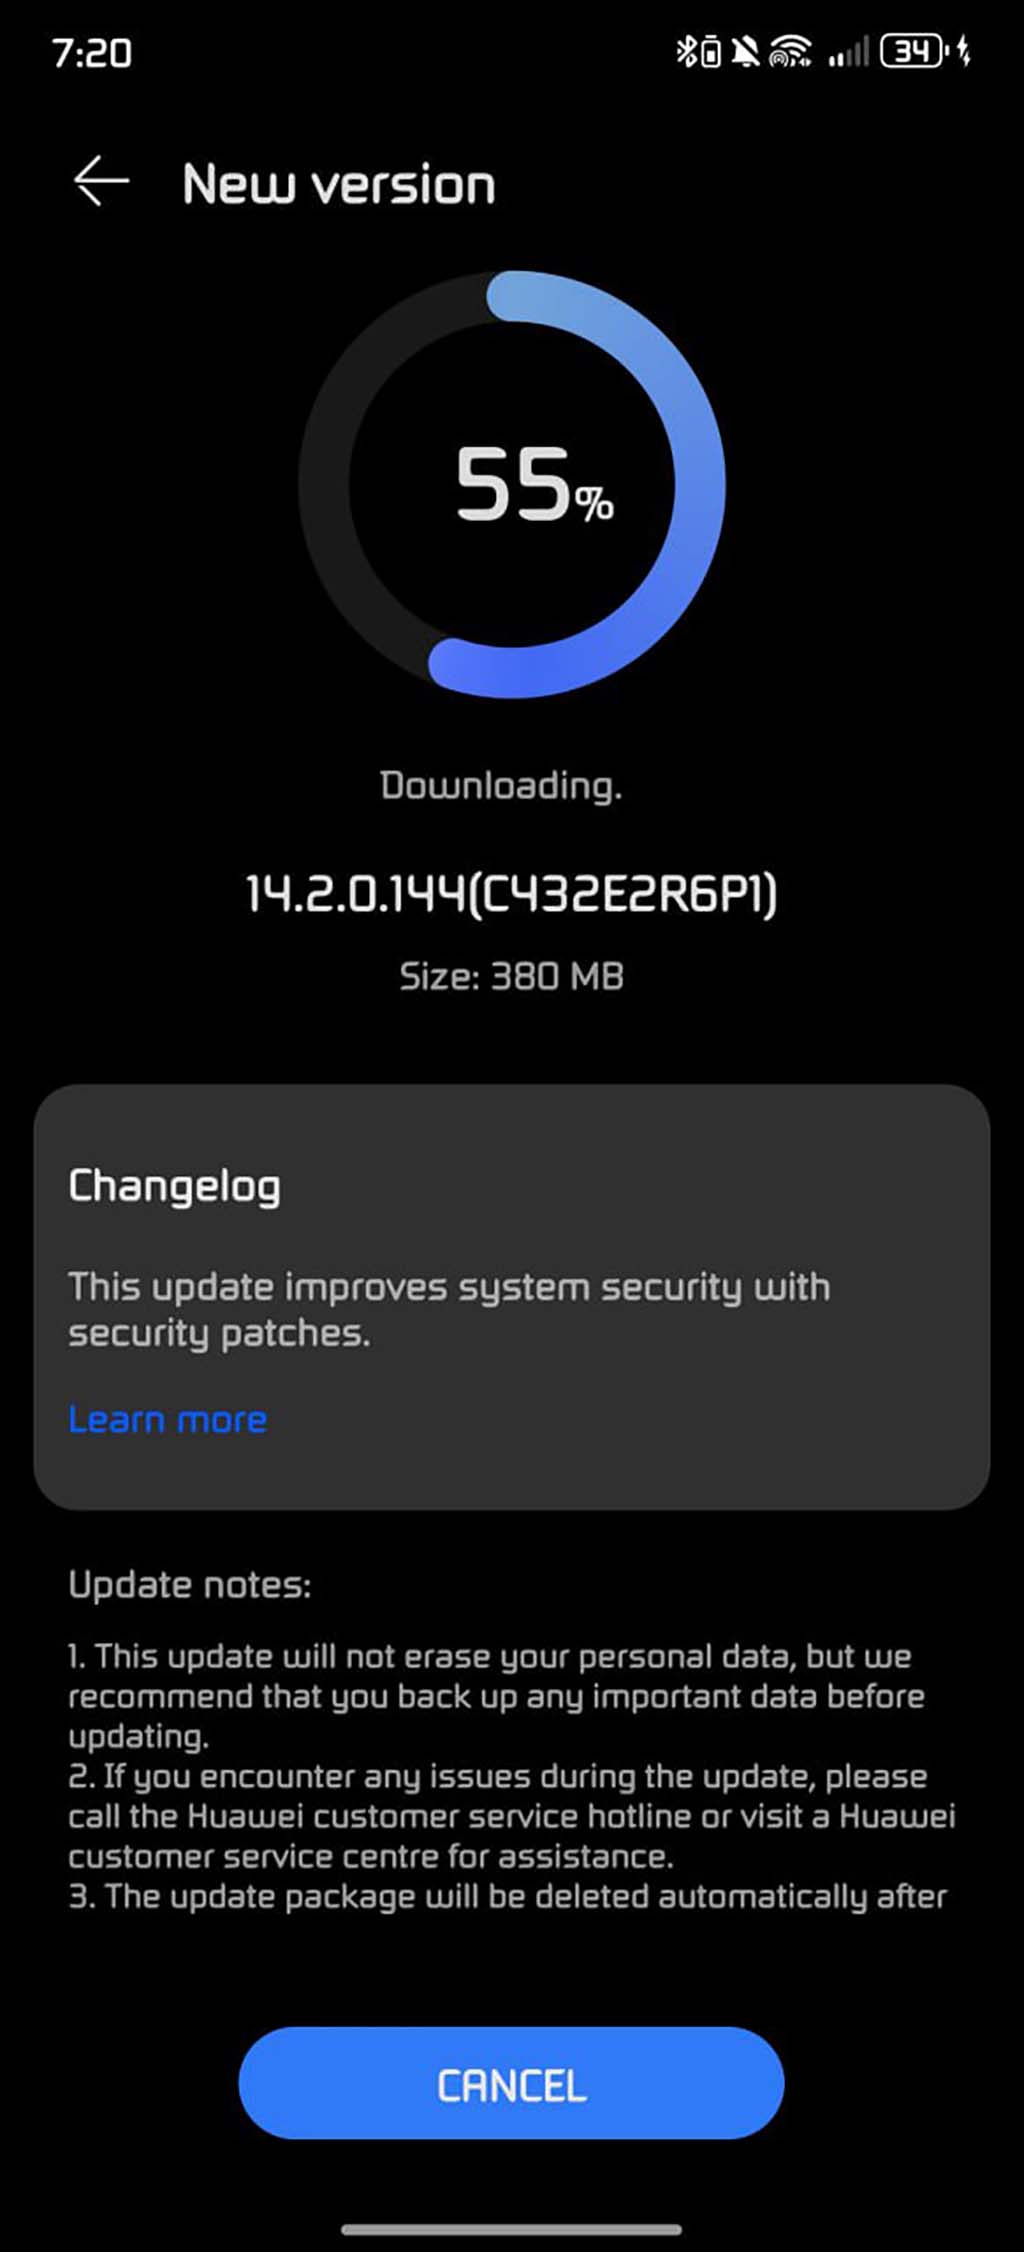 Huawei P50 Pro July 2024 update